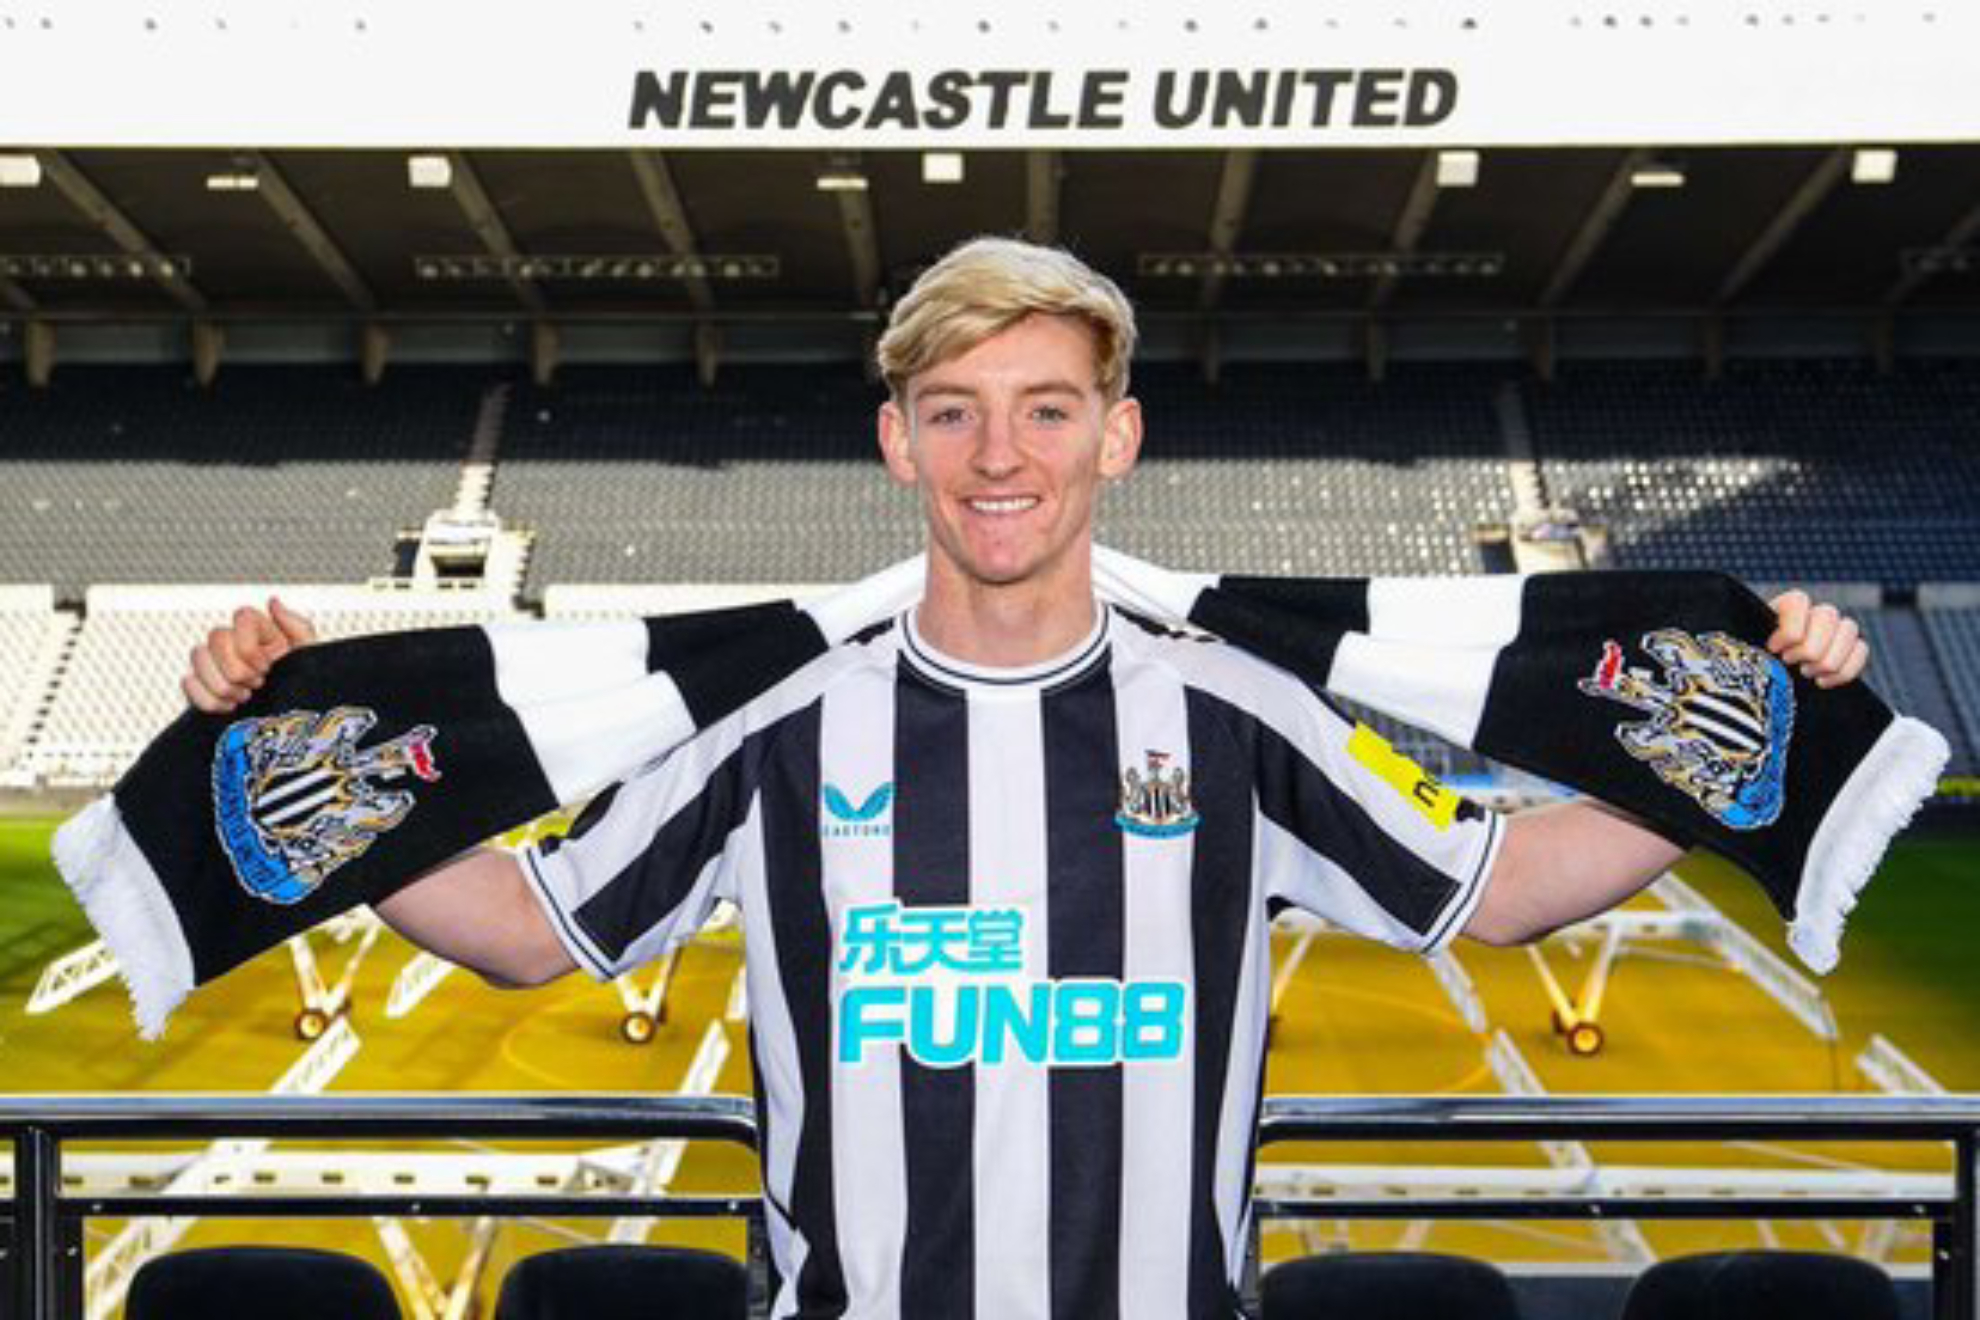 Gordon poses with Newcastle scarf